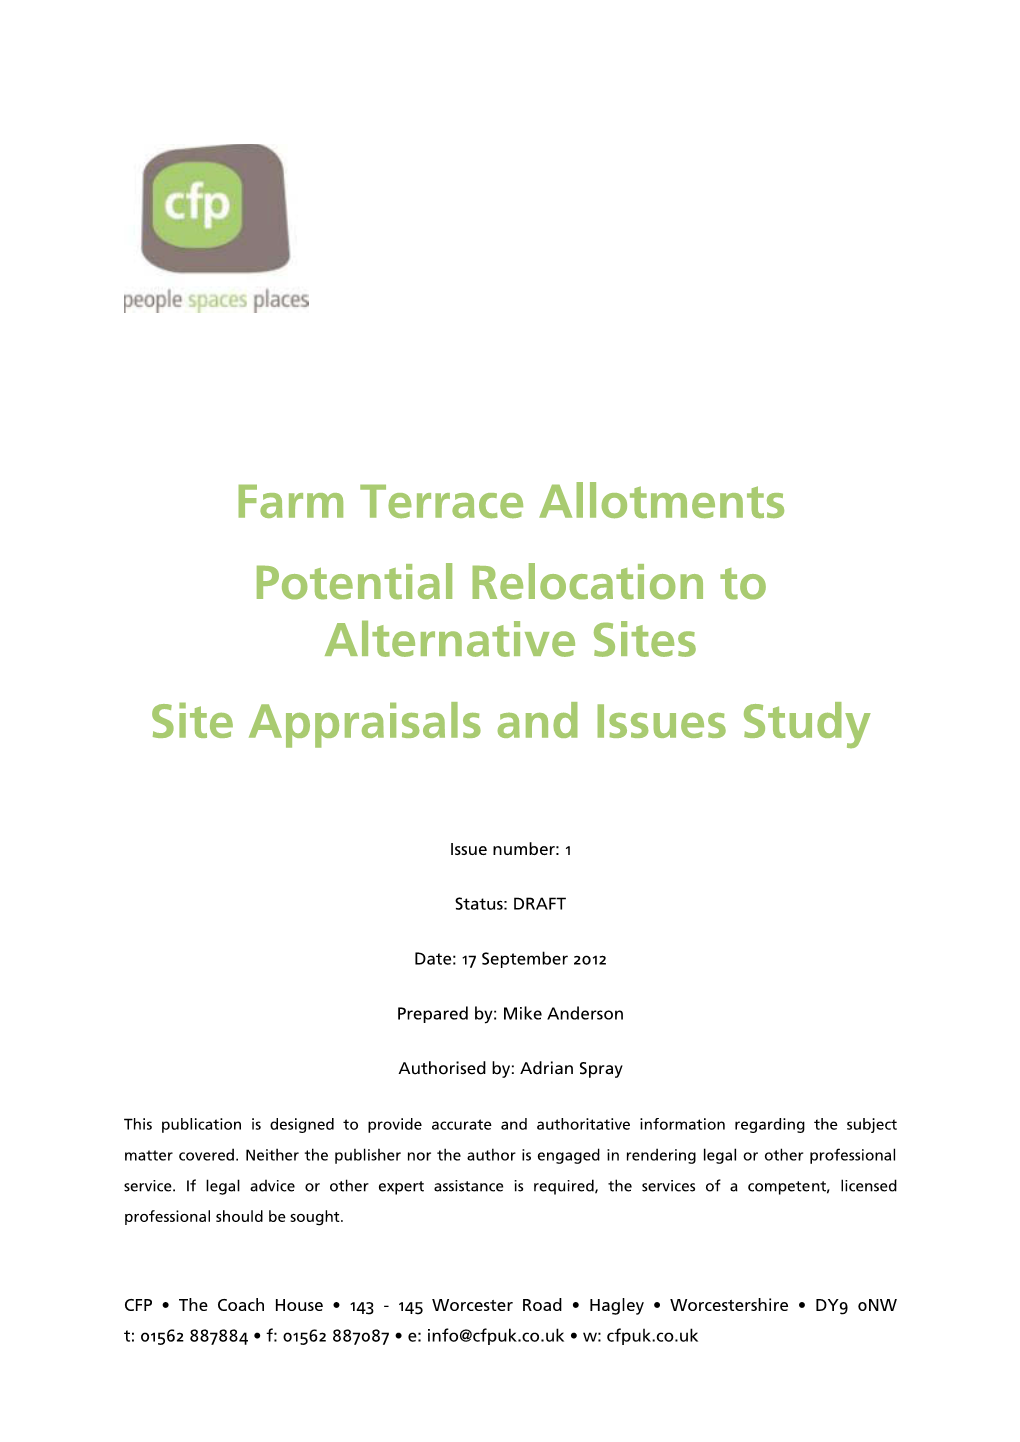 Farm Terrace Allotments Potential Relocation to Alternative Sites